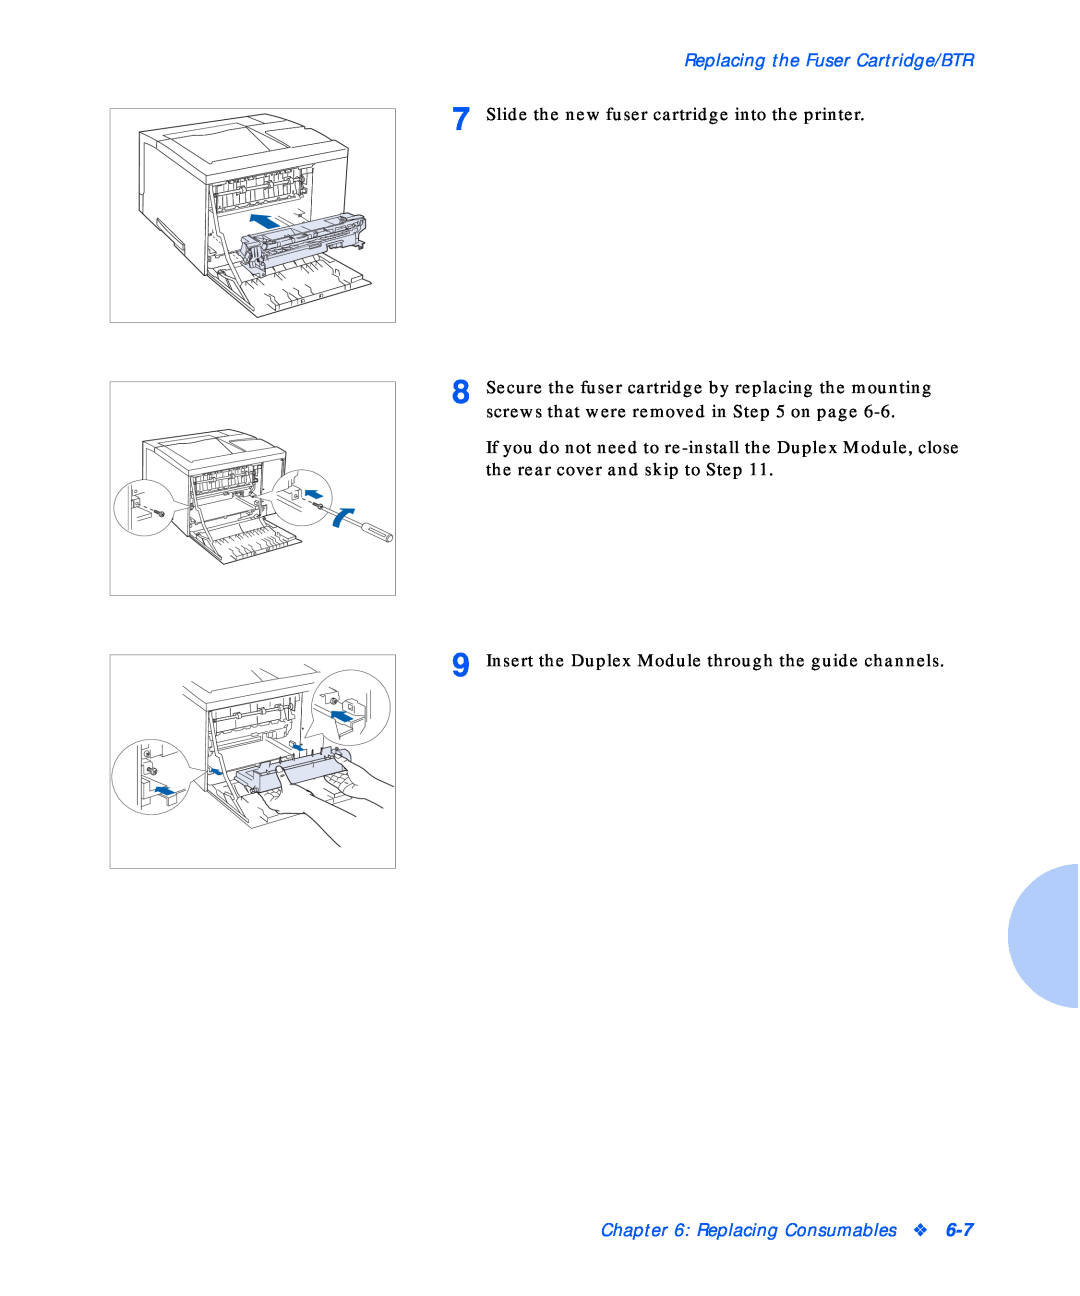 Xerox N17b manual Replacing the Fuser Cartridge/BTR, Slide the new fuser cartridge into the printer, Replacing Consumables 